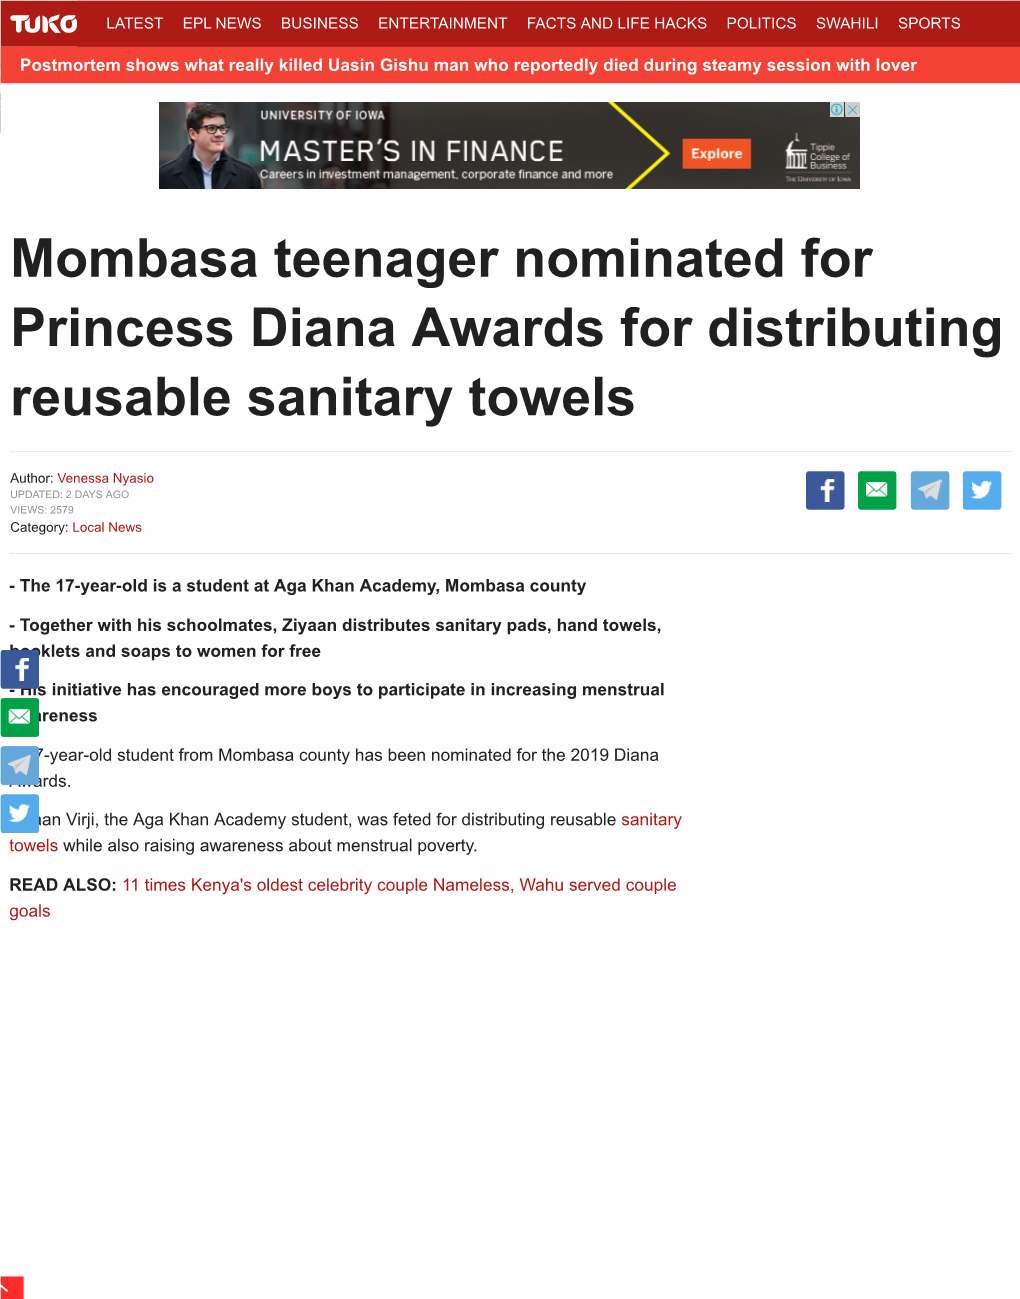 Mombasa Teenager Nominated for Princess Diana Awards for Distributing Reusable Sanitary Towels